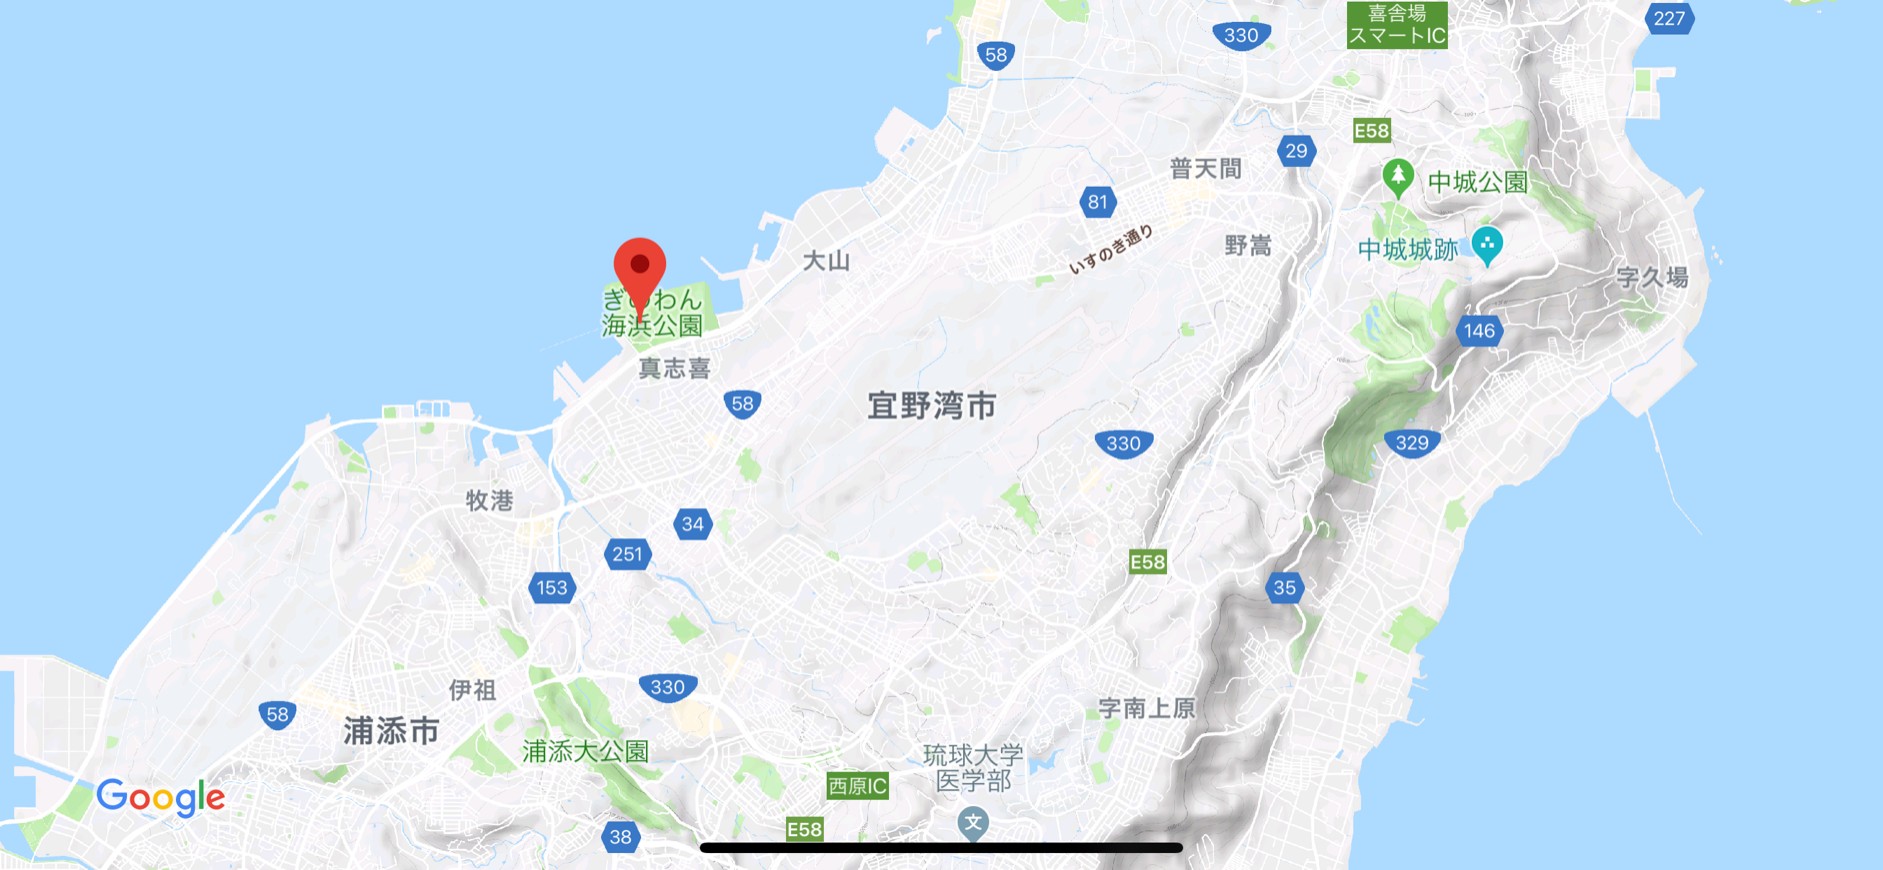 ONE OK ROCK 2019 – 2020 “Eye of the Storm” JAPAN 沖縄コンベンションセンター展示棟 地図2